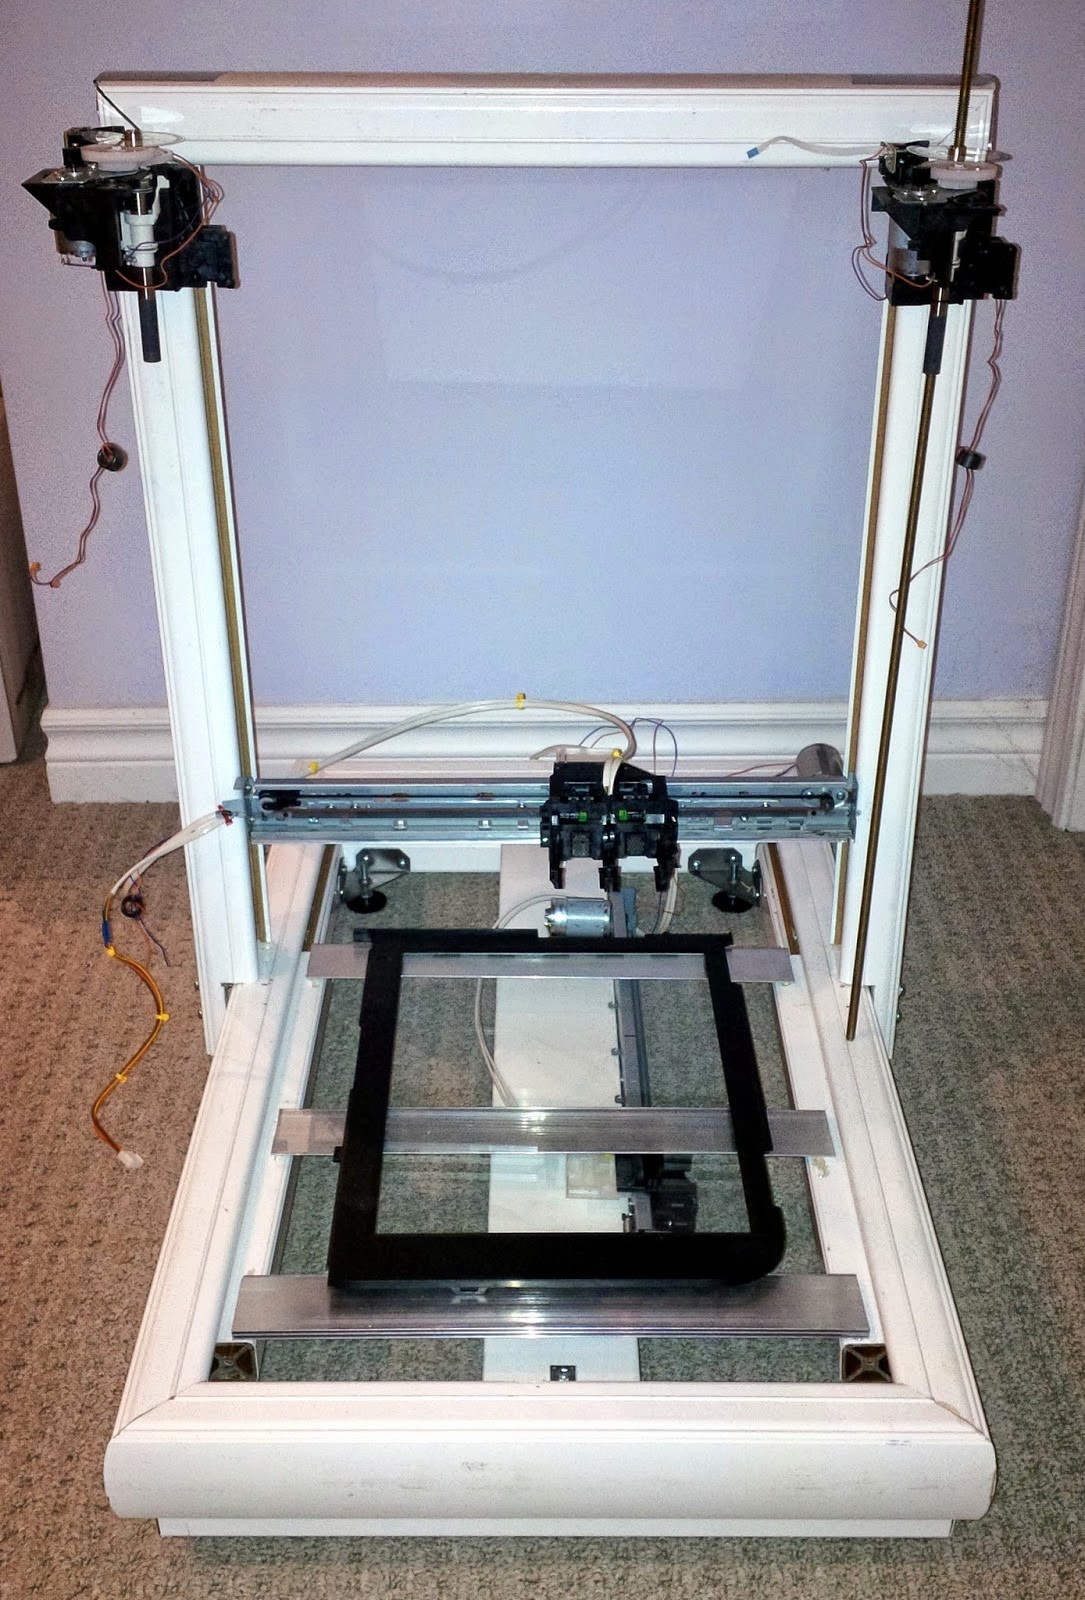 Best ideas about 3D Printer DIY
. Save or Pin DIY 3D Printing RepScrap DIY 3d printer from salvaged Now.